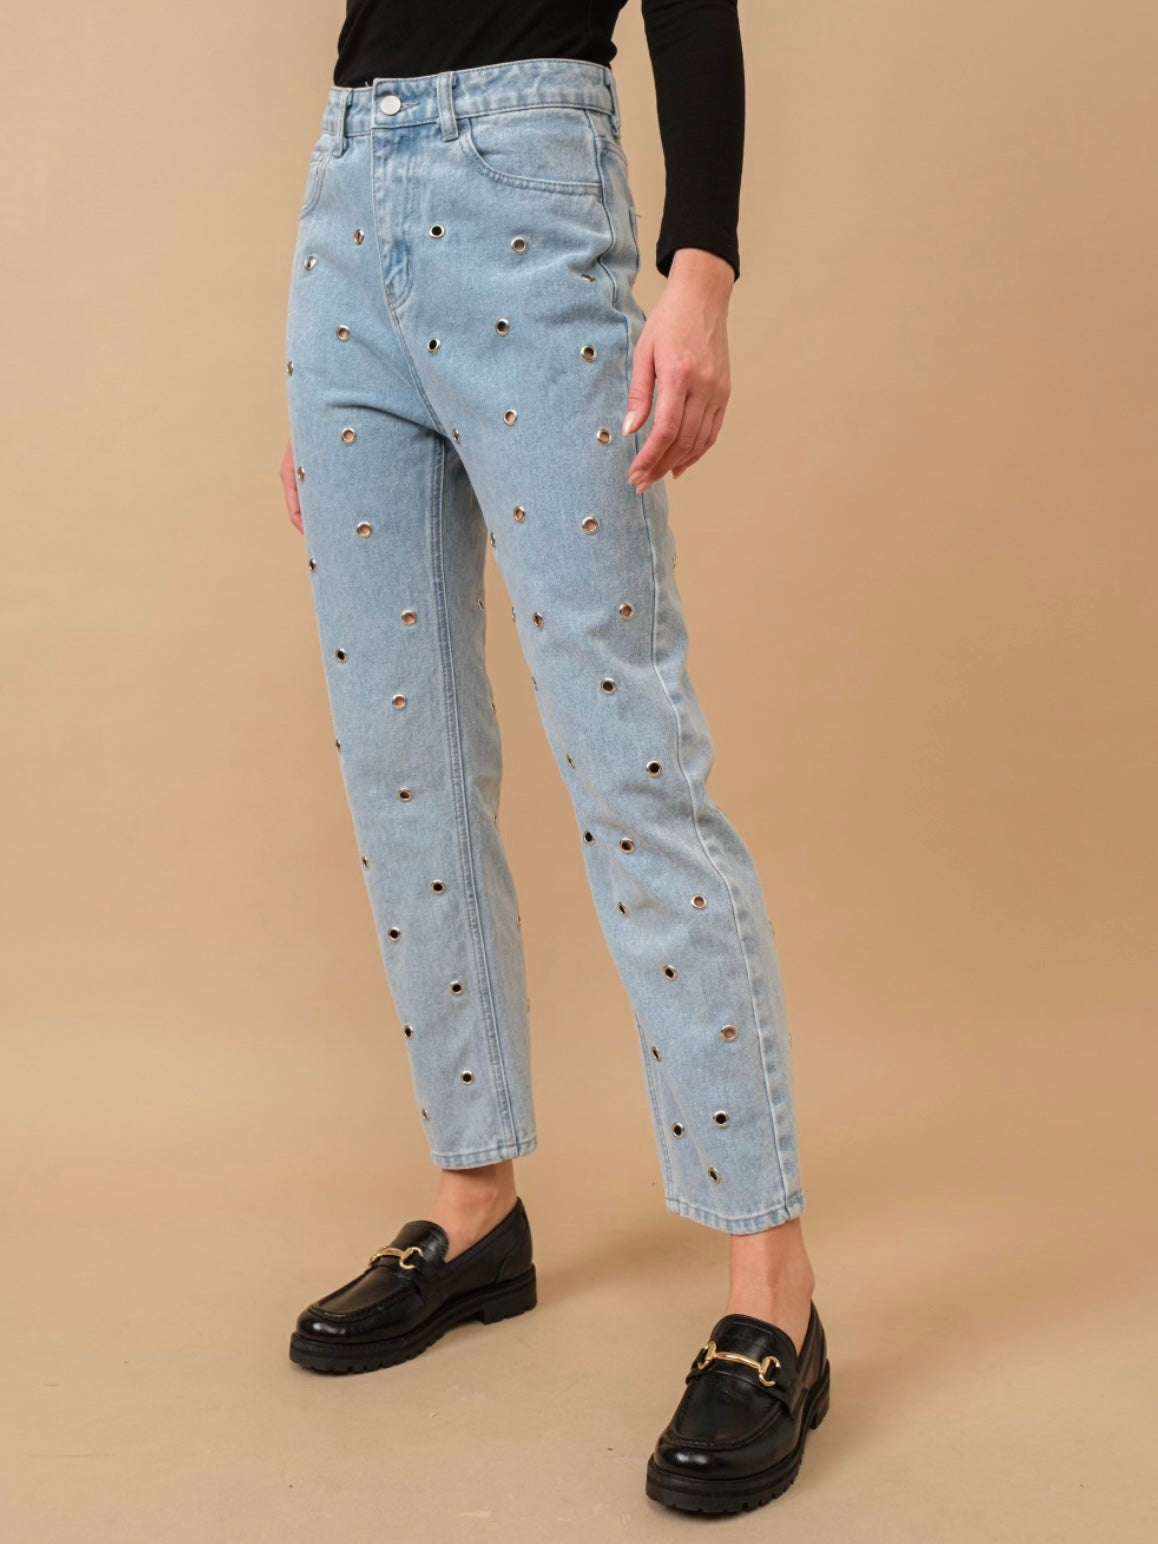 Light blue straight holes jeans pants